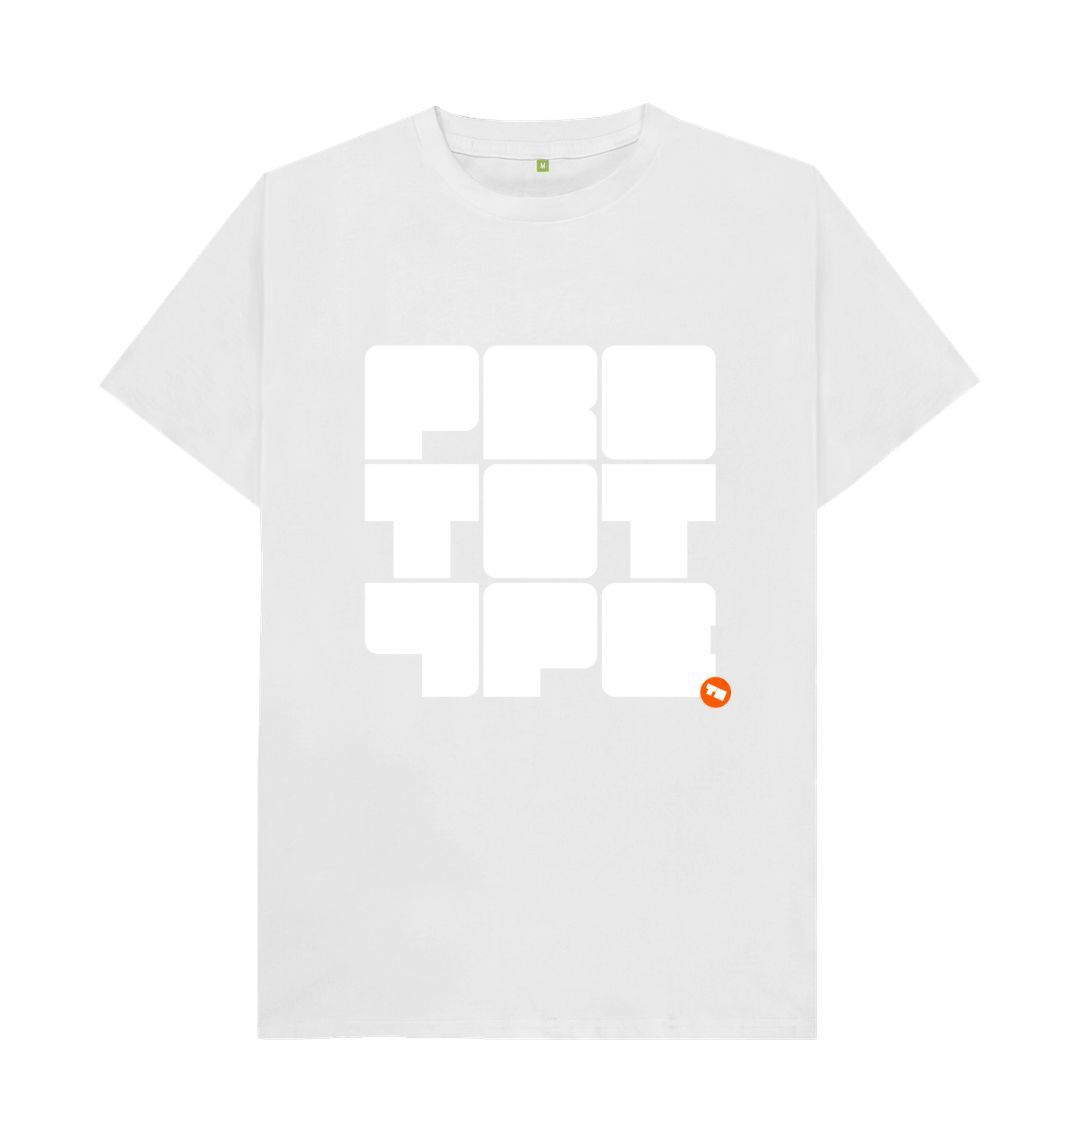 White PrototypeTM T-shirts